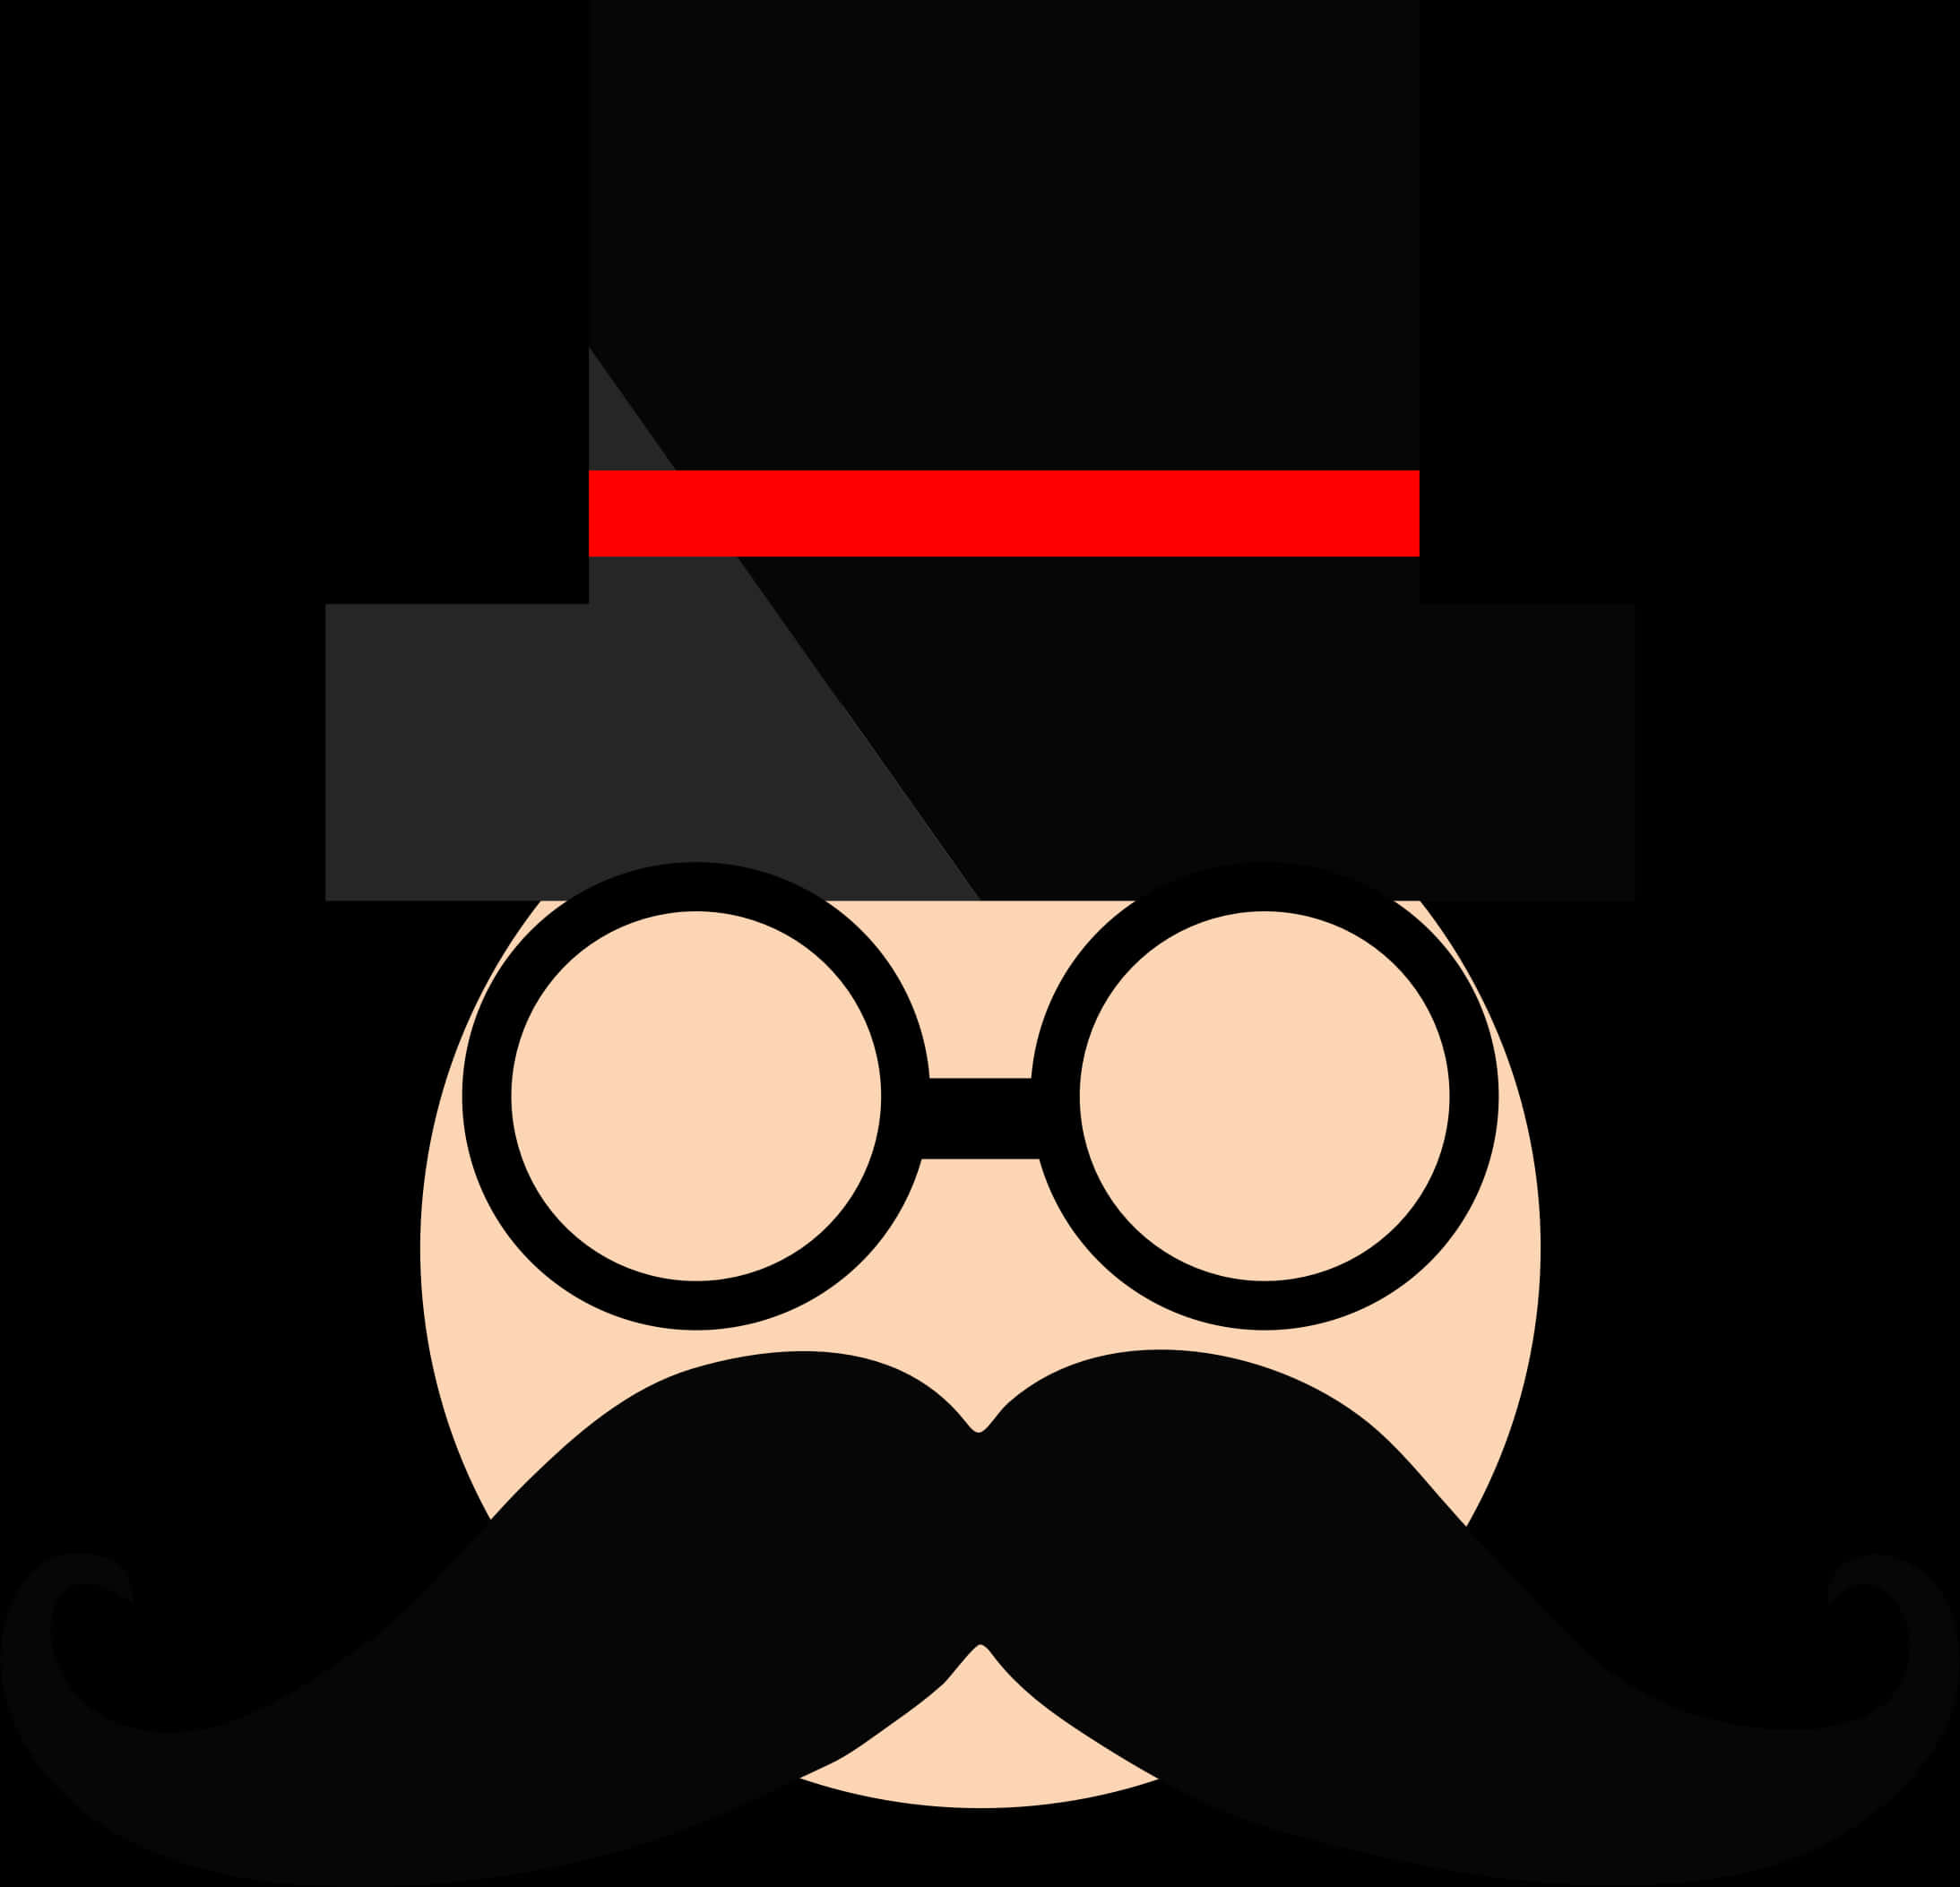 Iconic Mustache Glassesand Hat